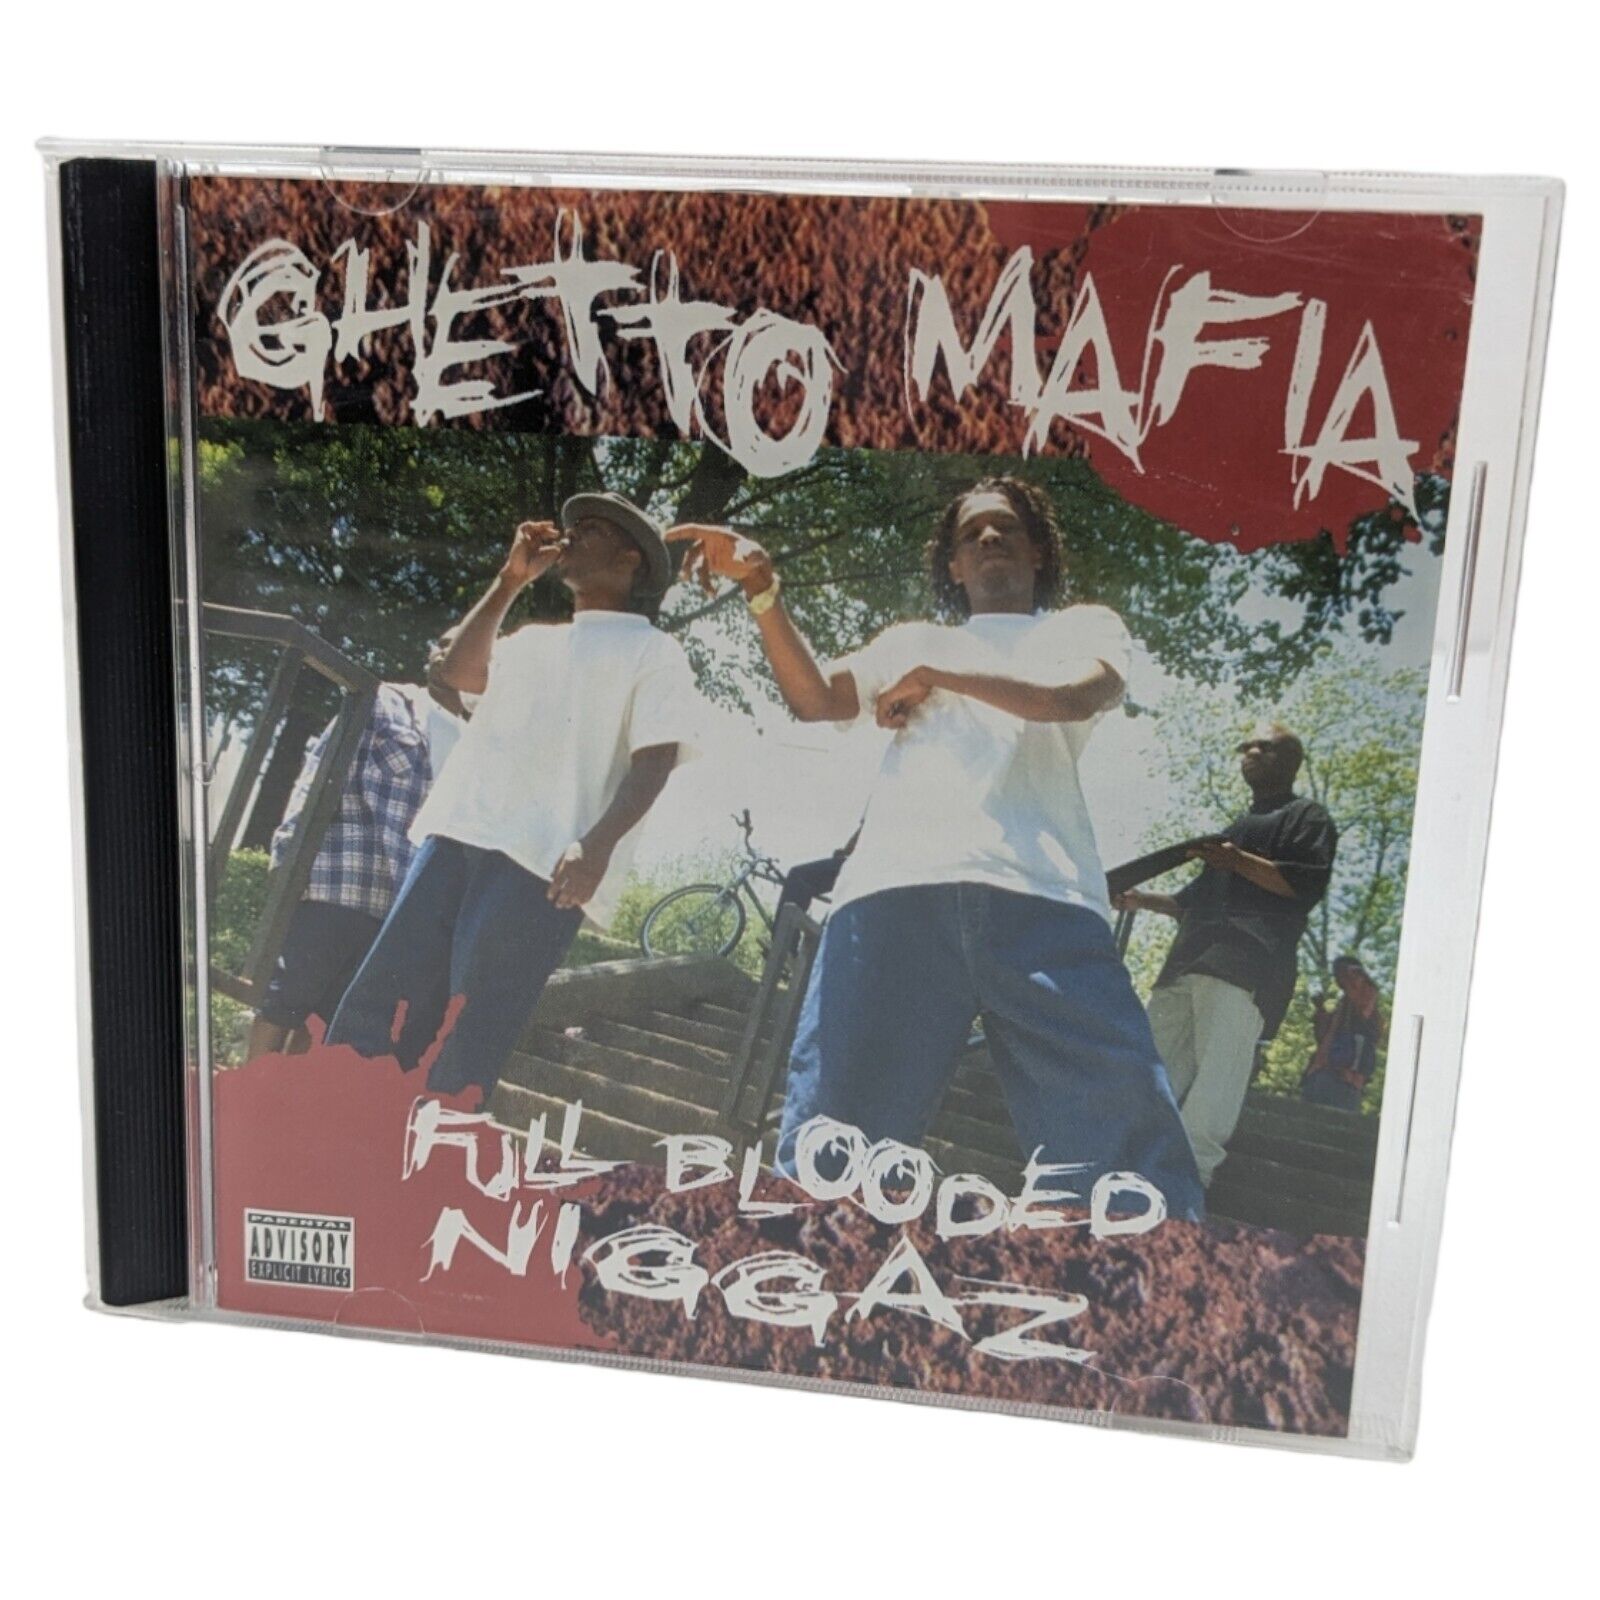 Full Blooded Niggaz by Ghetto Mafia (CD, 1995) RARE 90s Rap Hip Hop